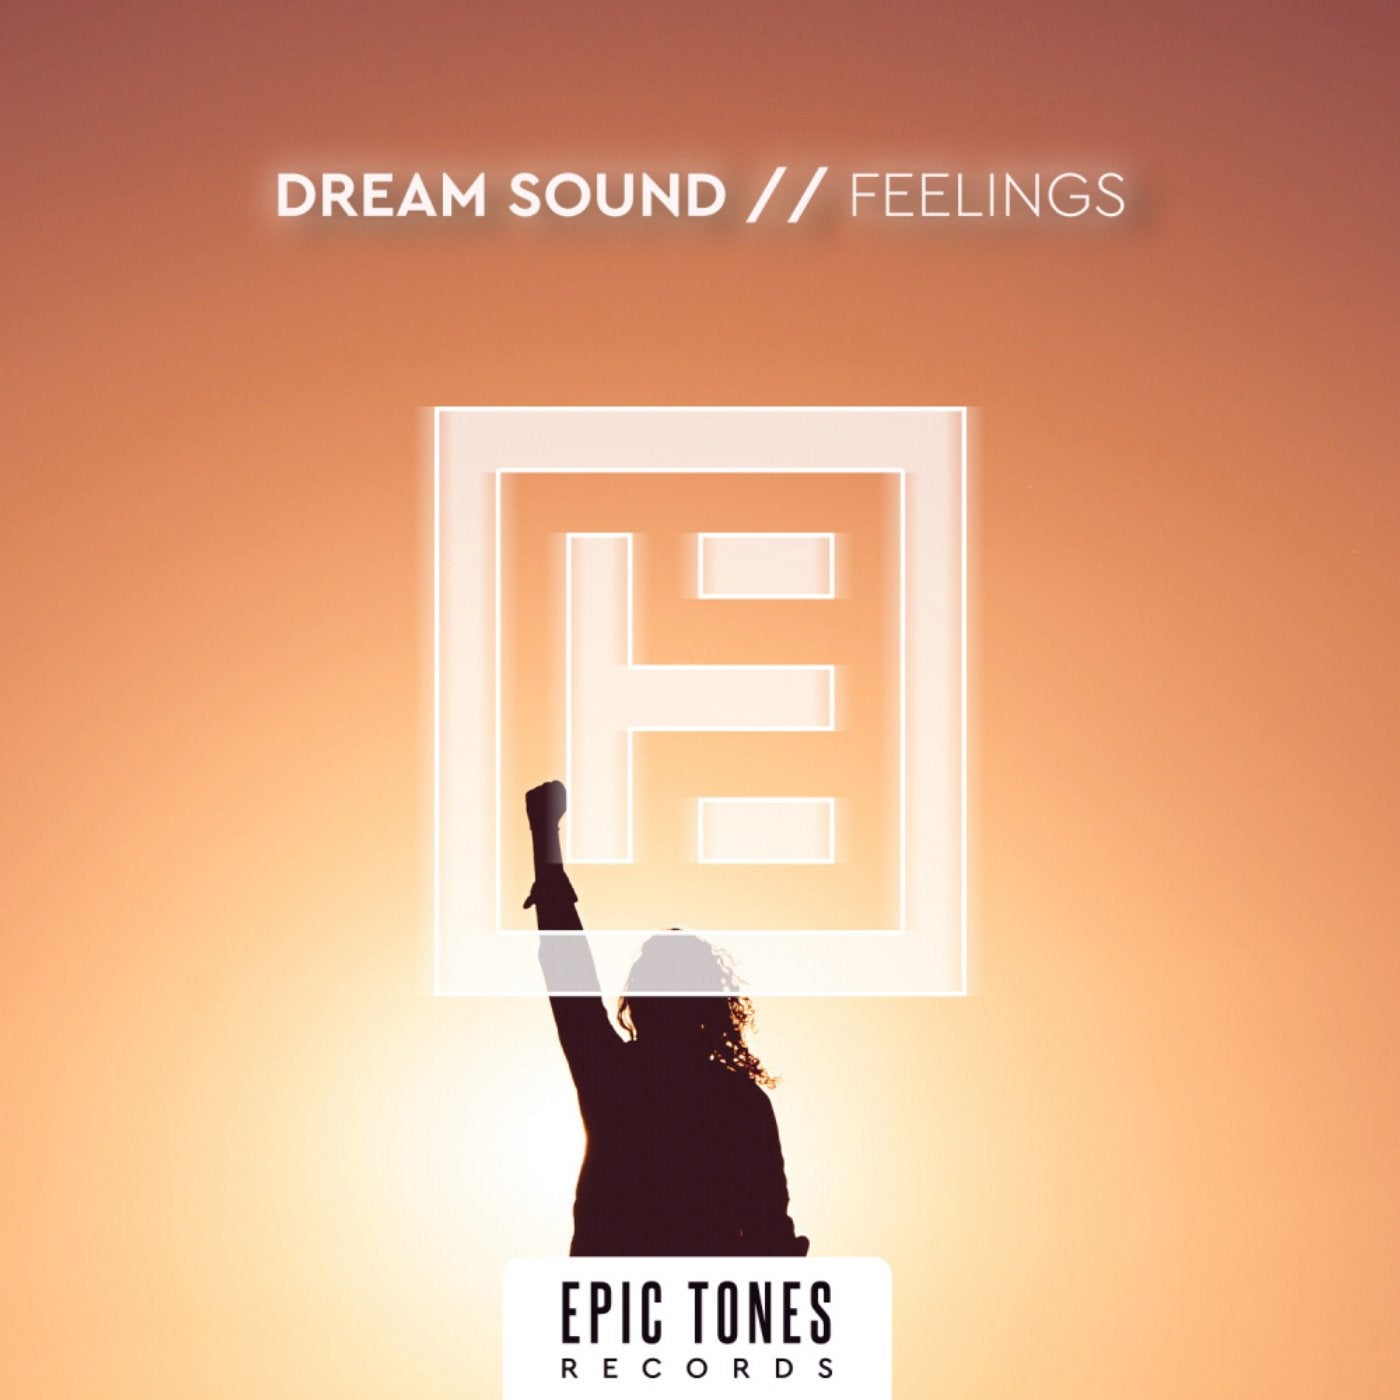 Feel me original mix. Саунд филинг. Your Dream Sound. The feeling (Original Mix). Koos — feelings (Original Mix).